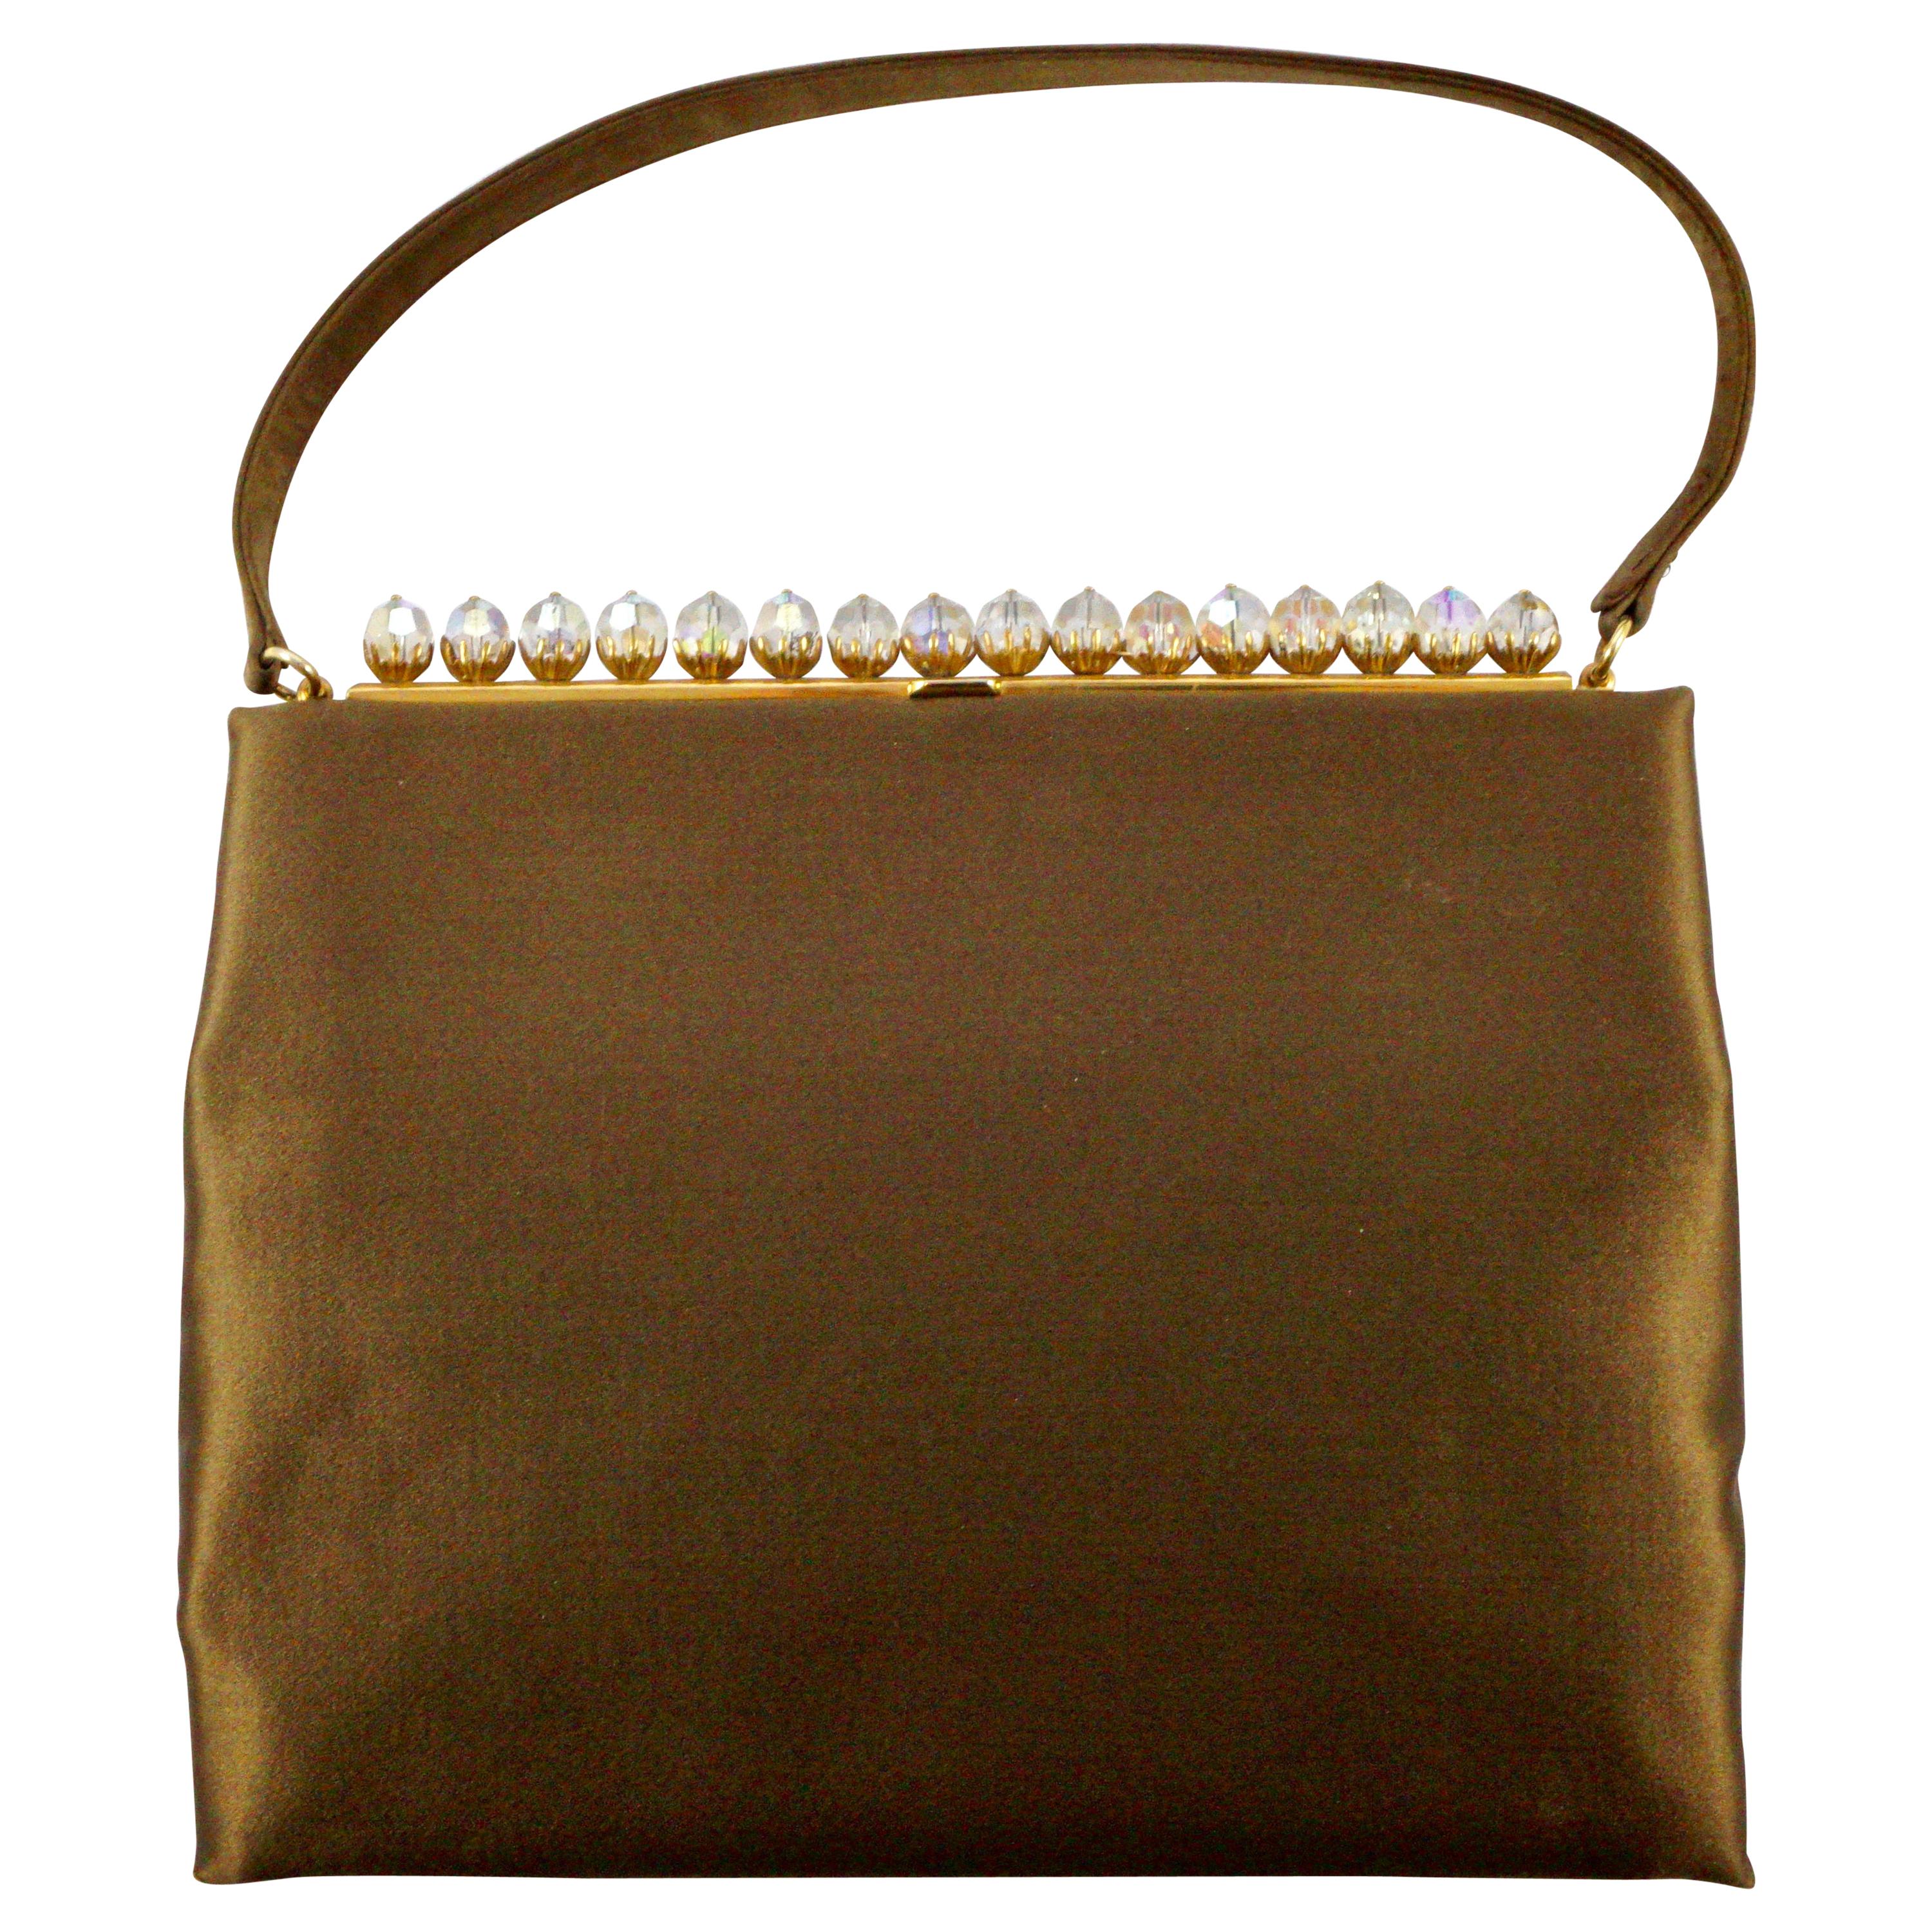 Susan Handbags London Bronze Satin Handbag with Aurora Borealis Beads 